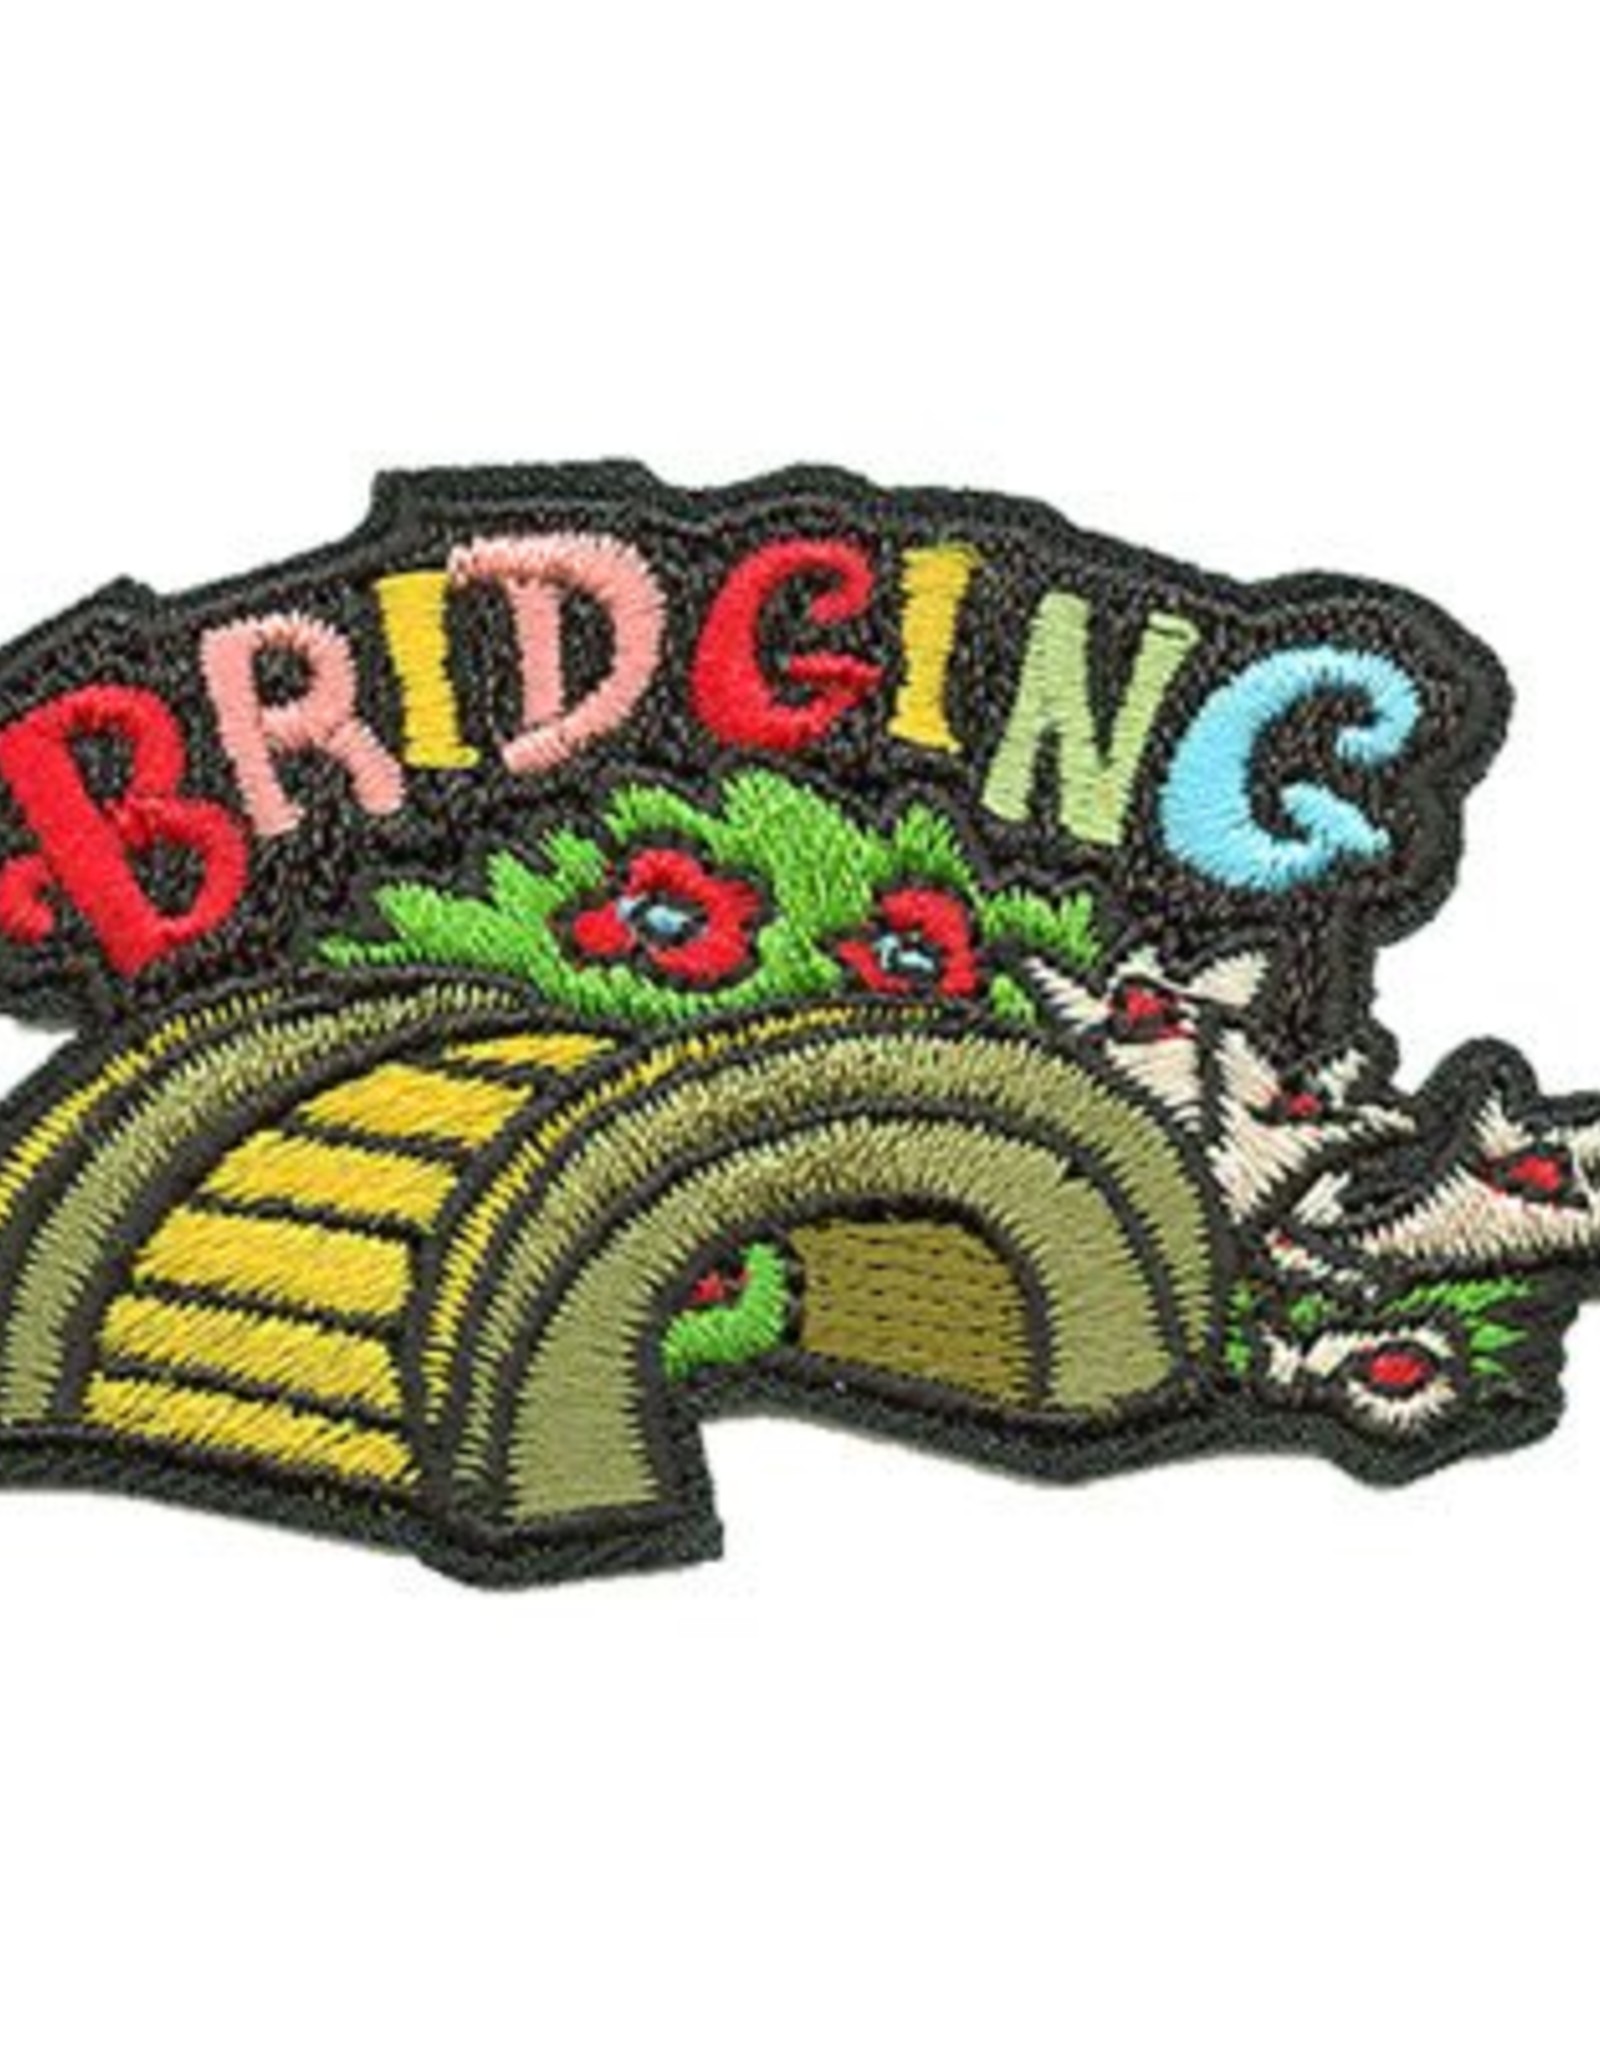 Advantage Emblem & Screen Prnt *Bridging Bridge & Flowers Fun Patch